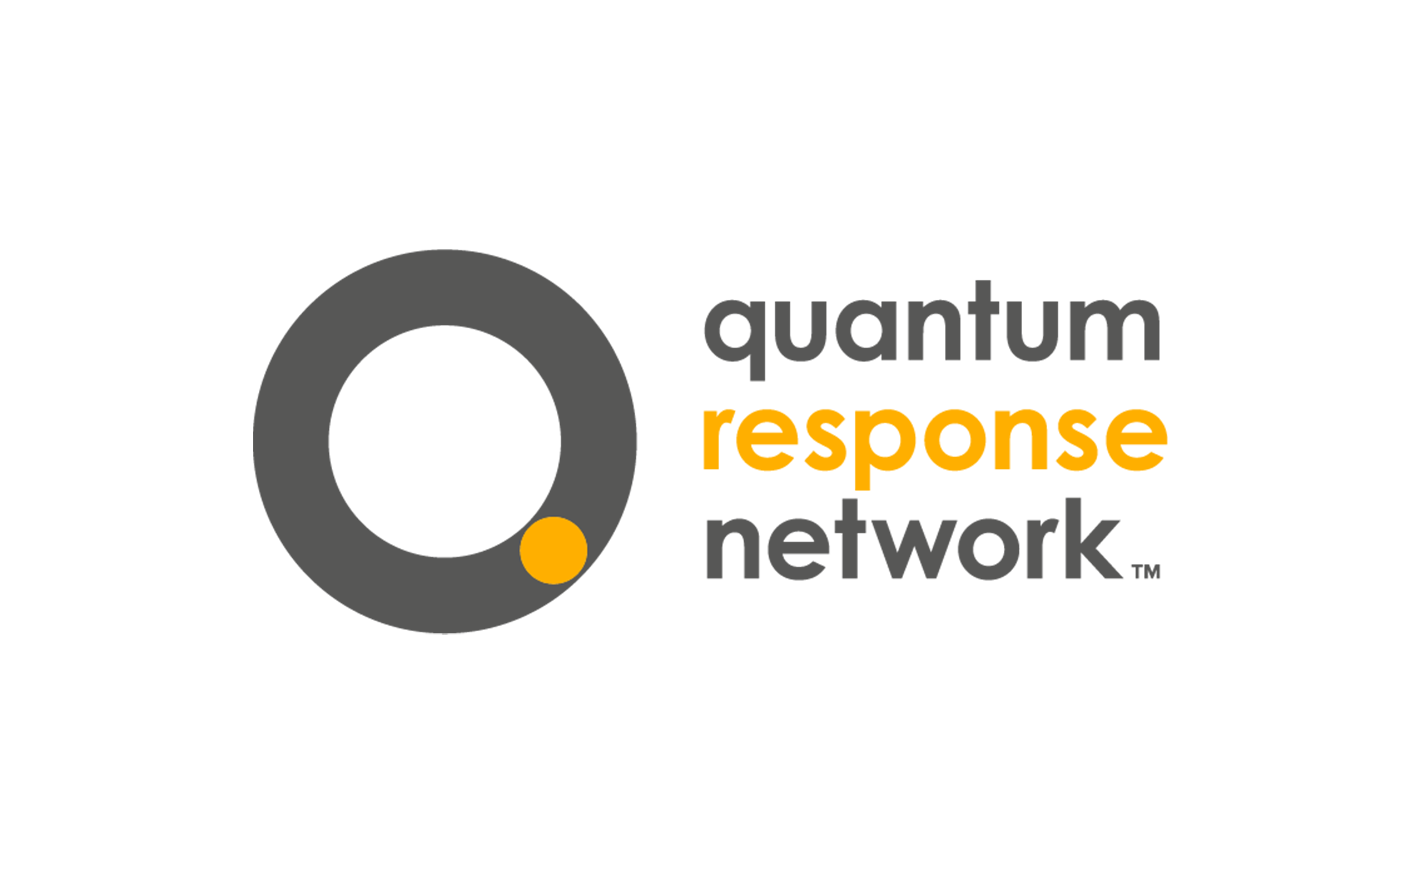 Quantum Response Network logo